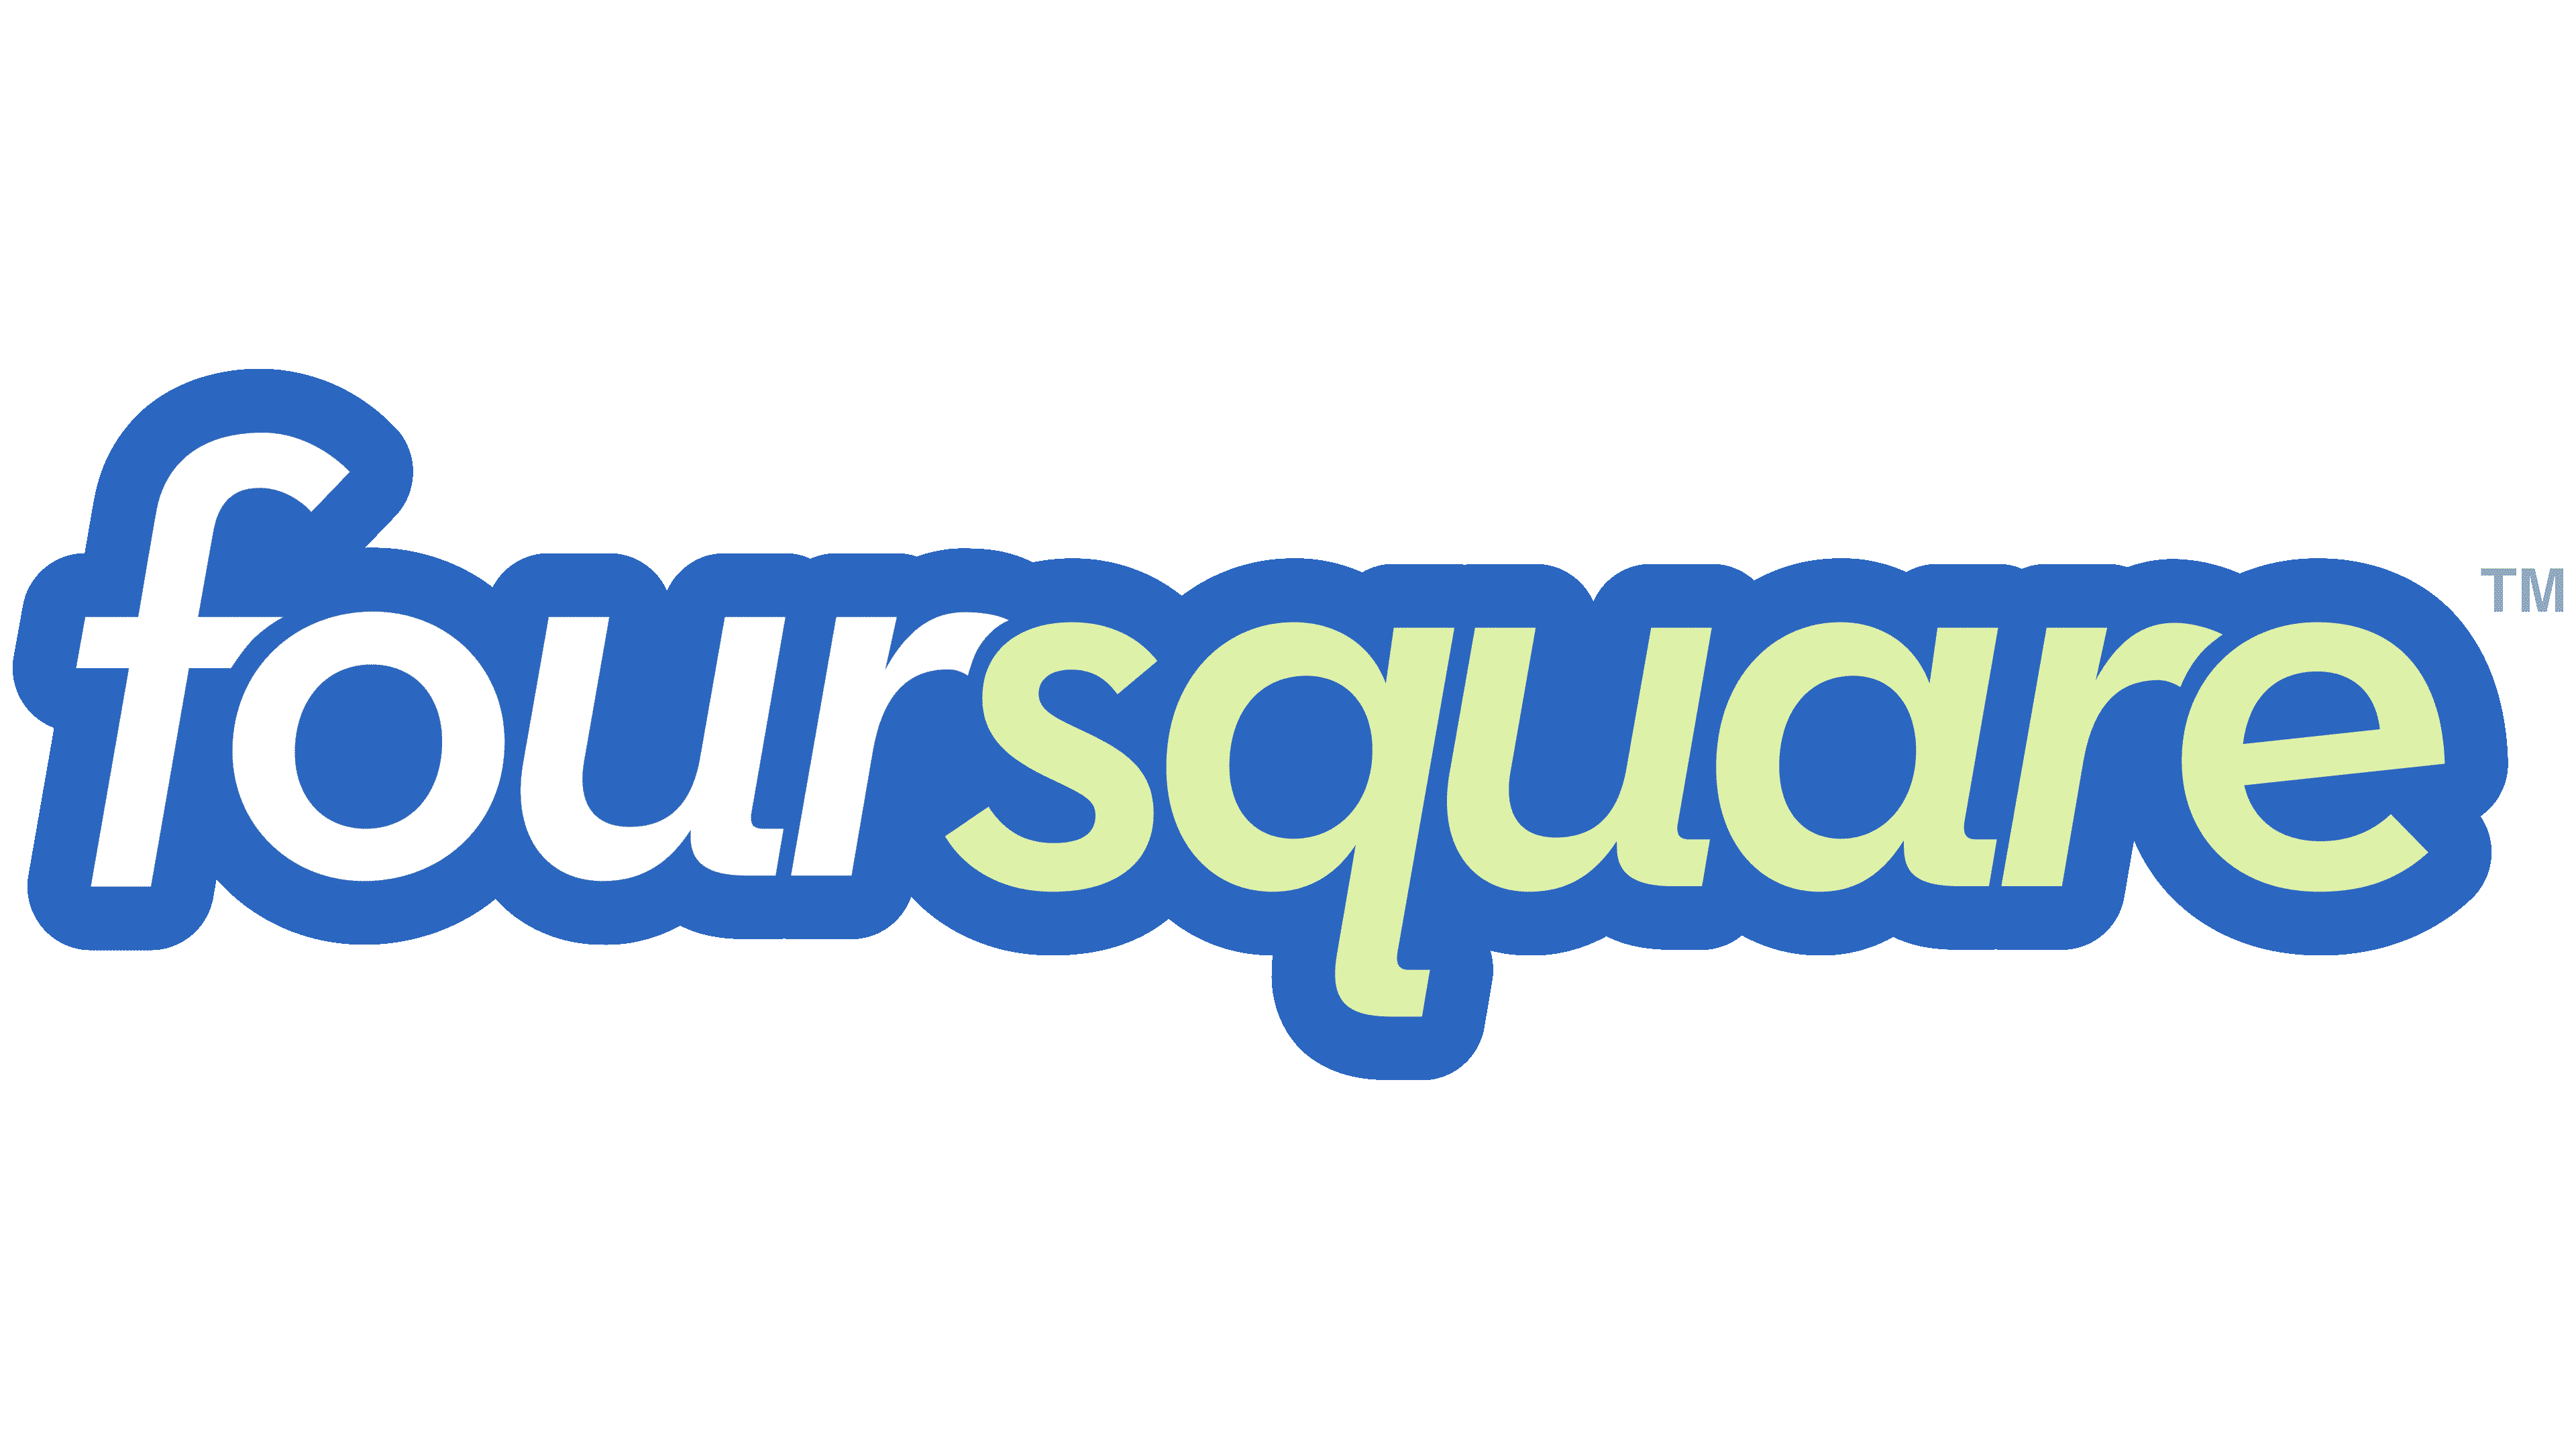 File:Foursquare-logo.png - Wikimedia Commons